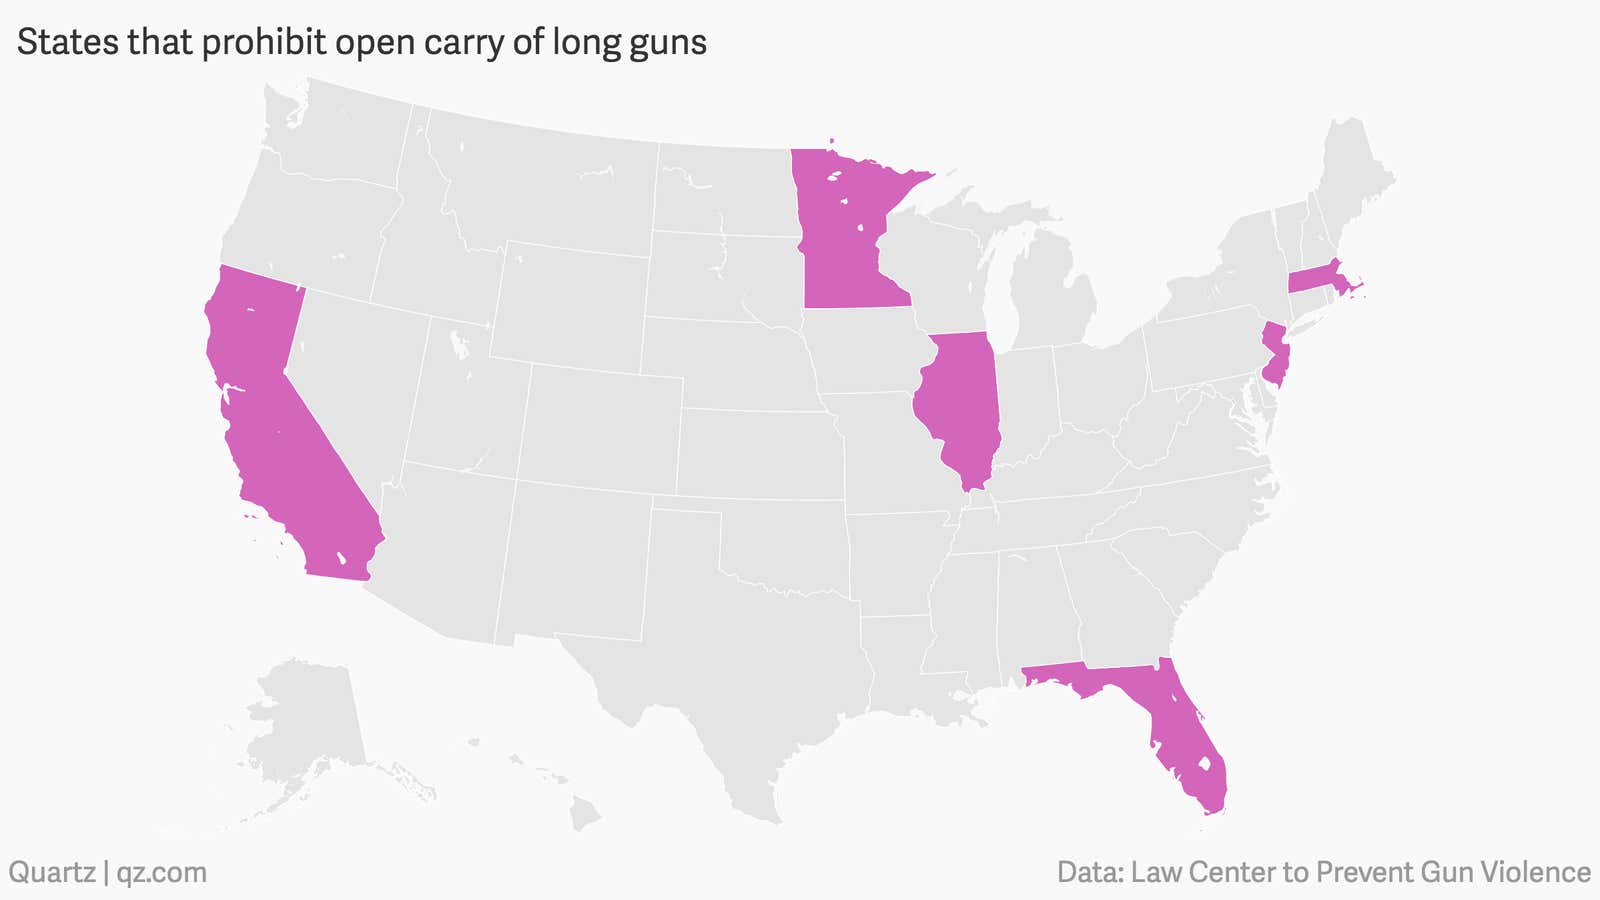 Six states prohibit open carry of long guns.